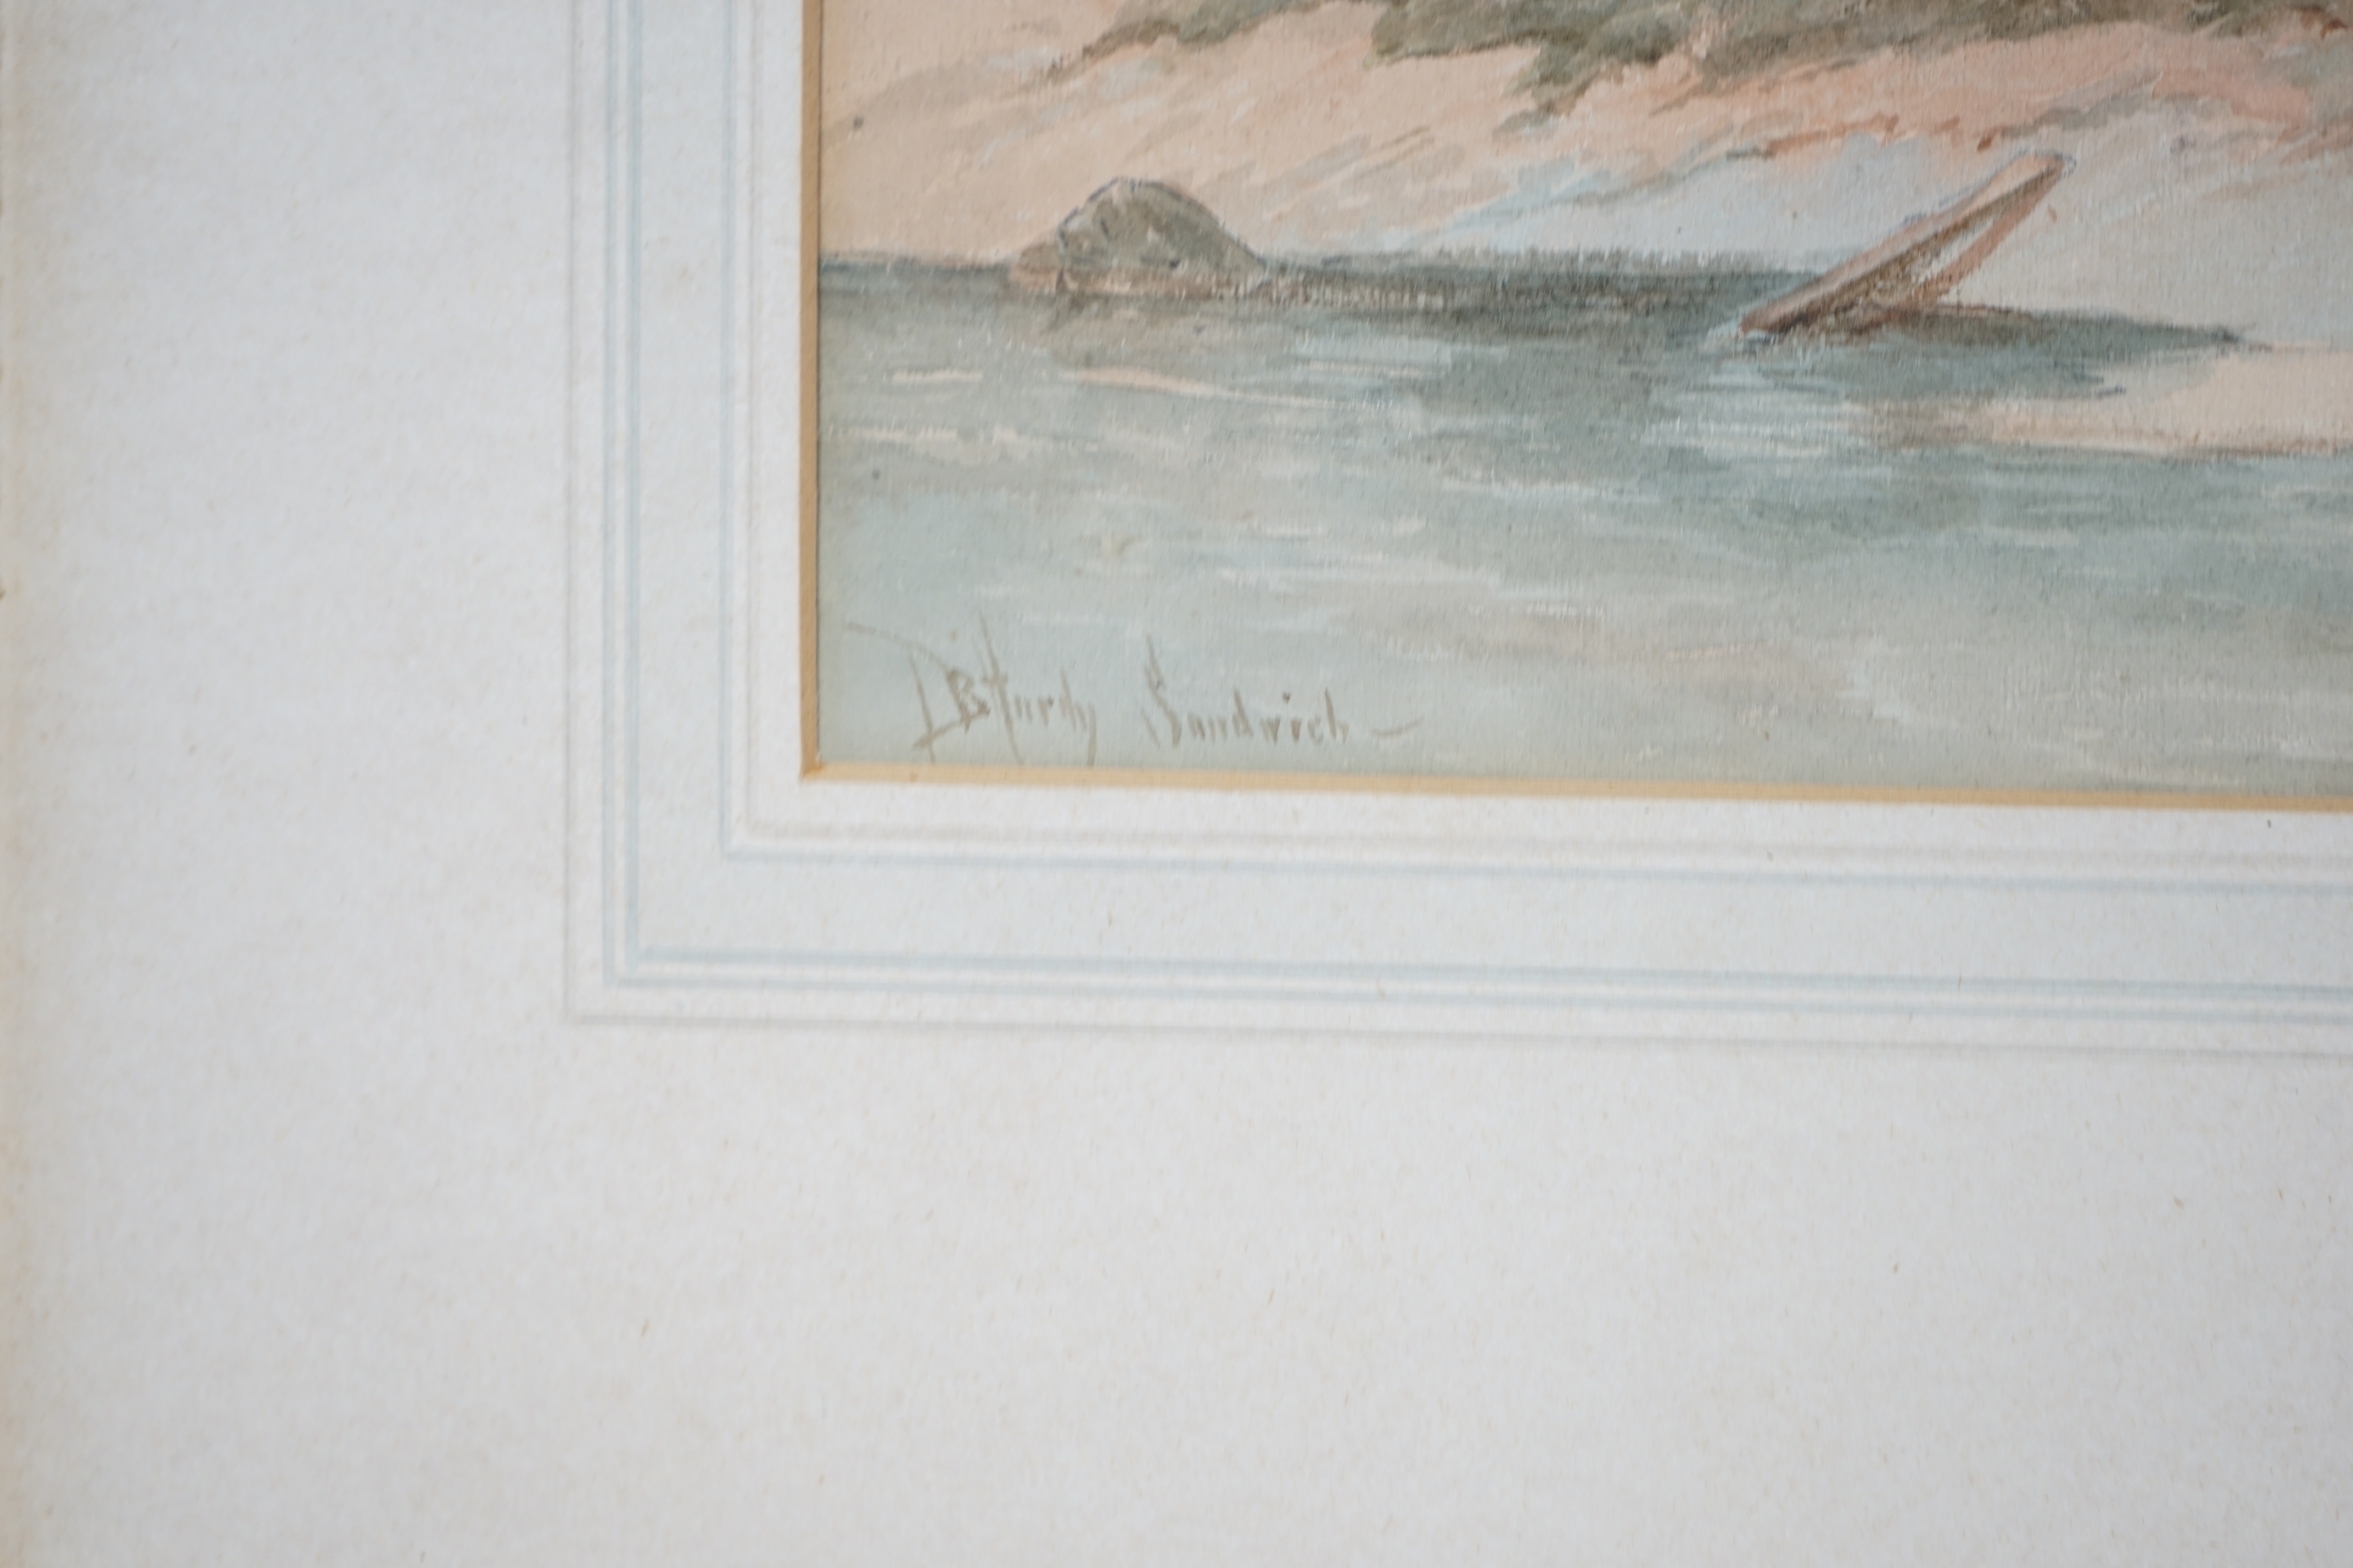 Thomas Bush Hardy (1842-1897), watercolour, 'Sandwich', signed, 28 x 44cm, unframed